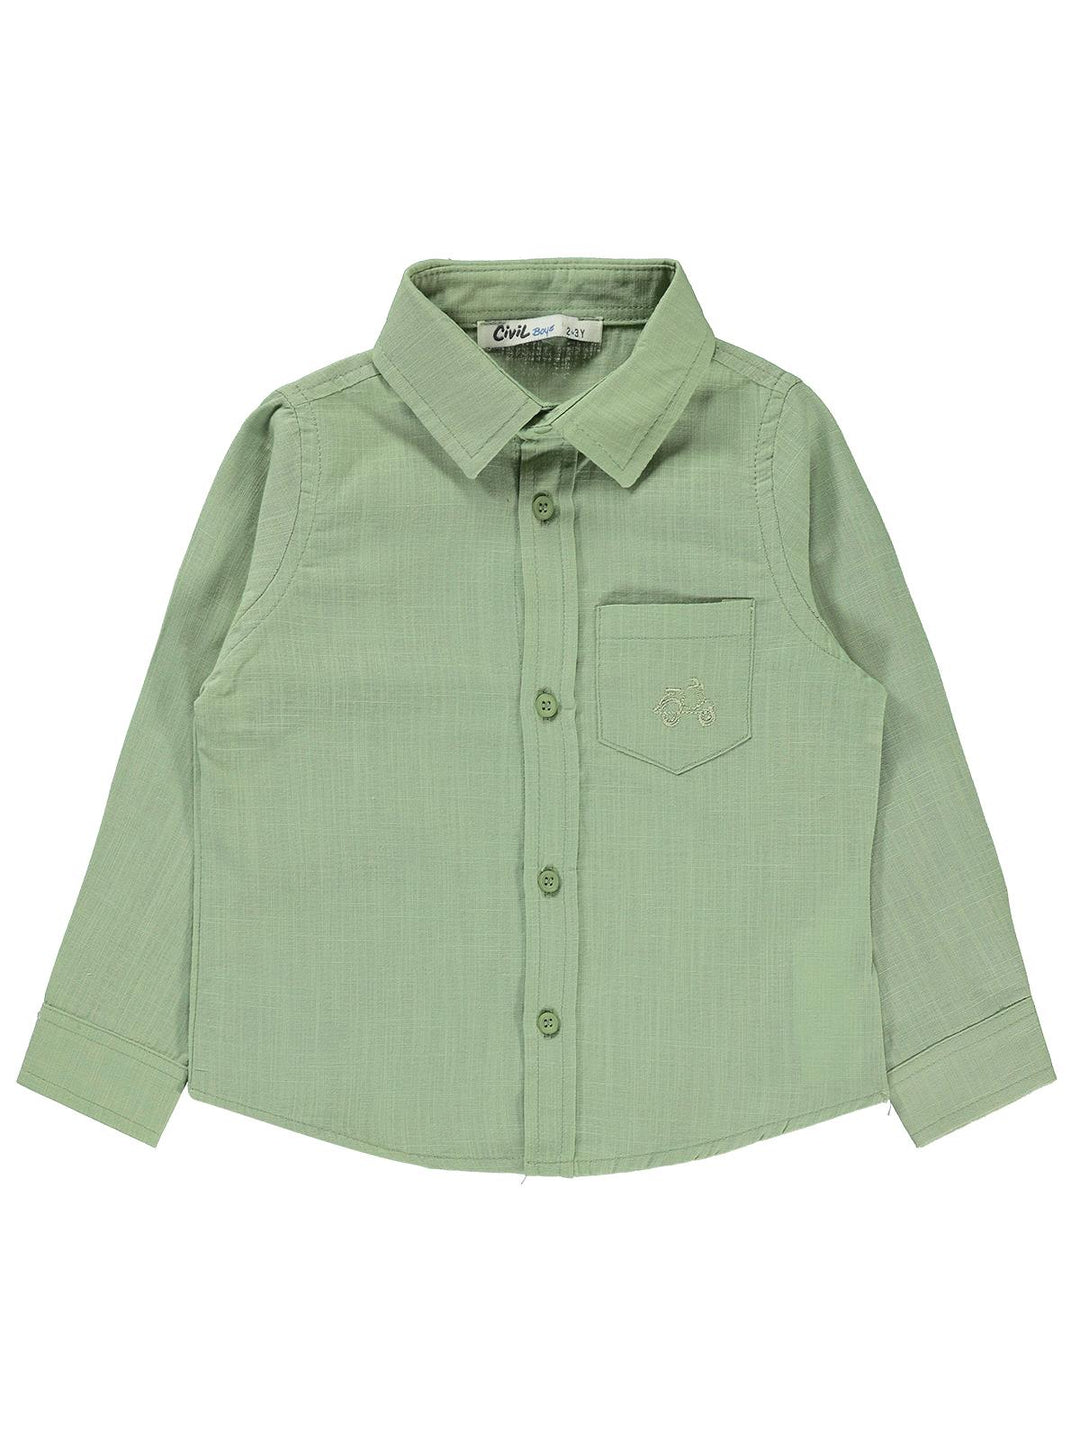 Civil Boys F/S Linen Collar Shirt F/O #2203-2 (S-22)